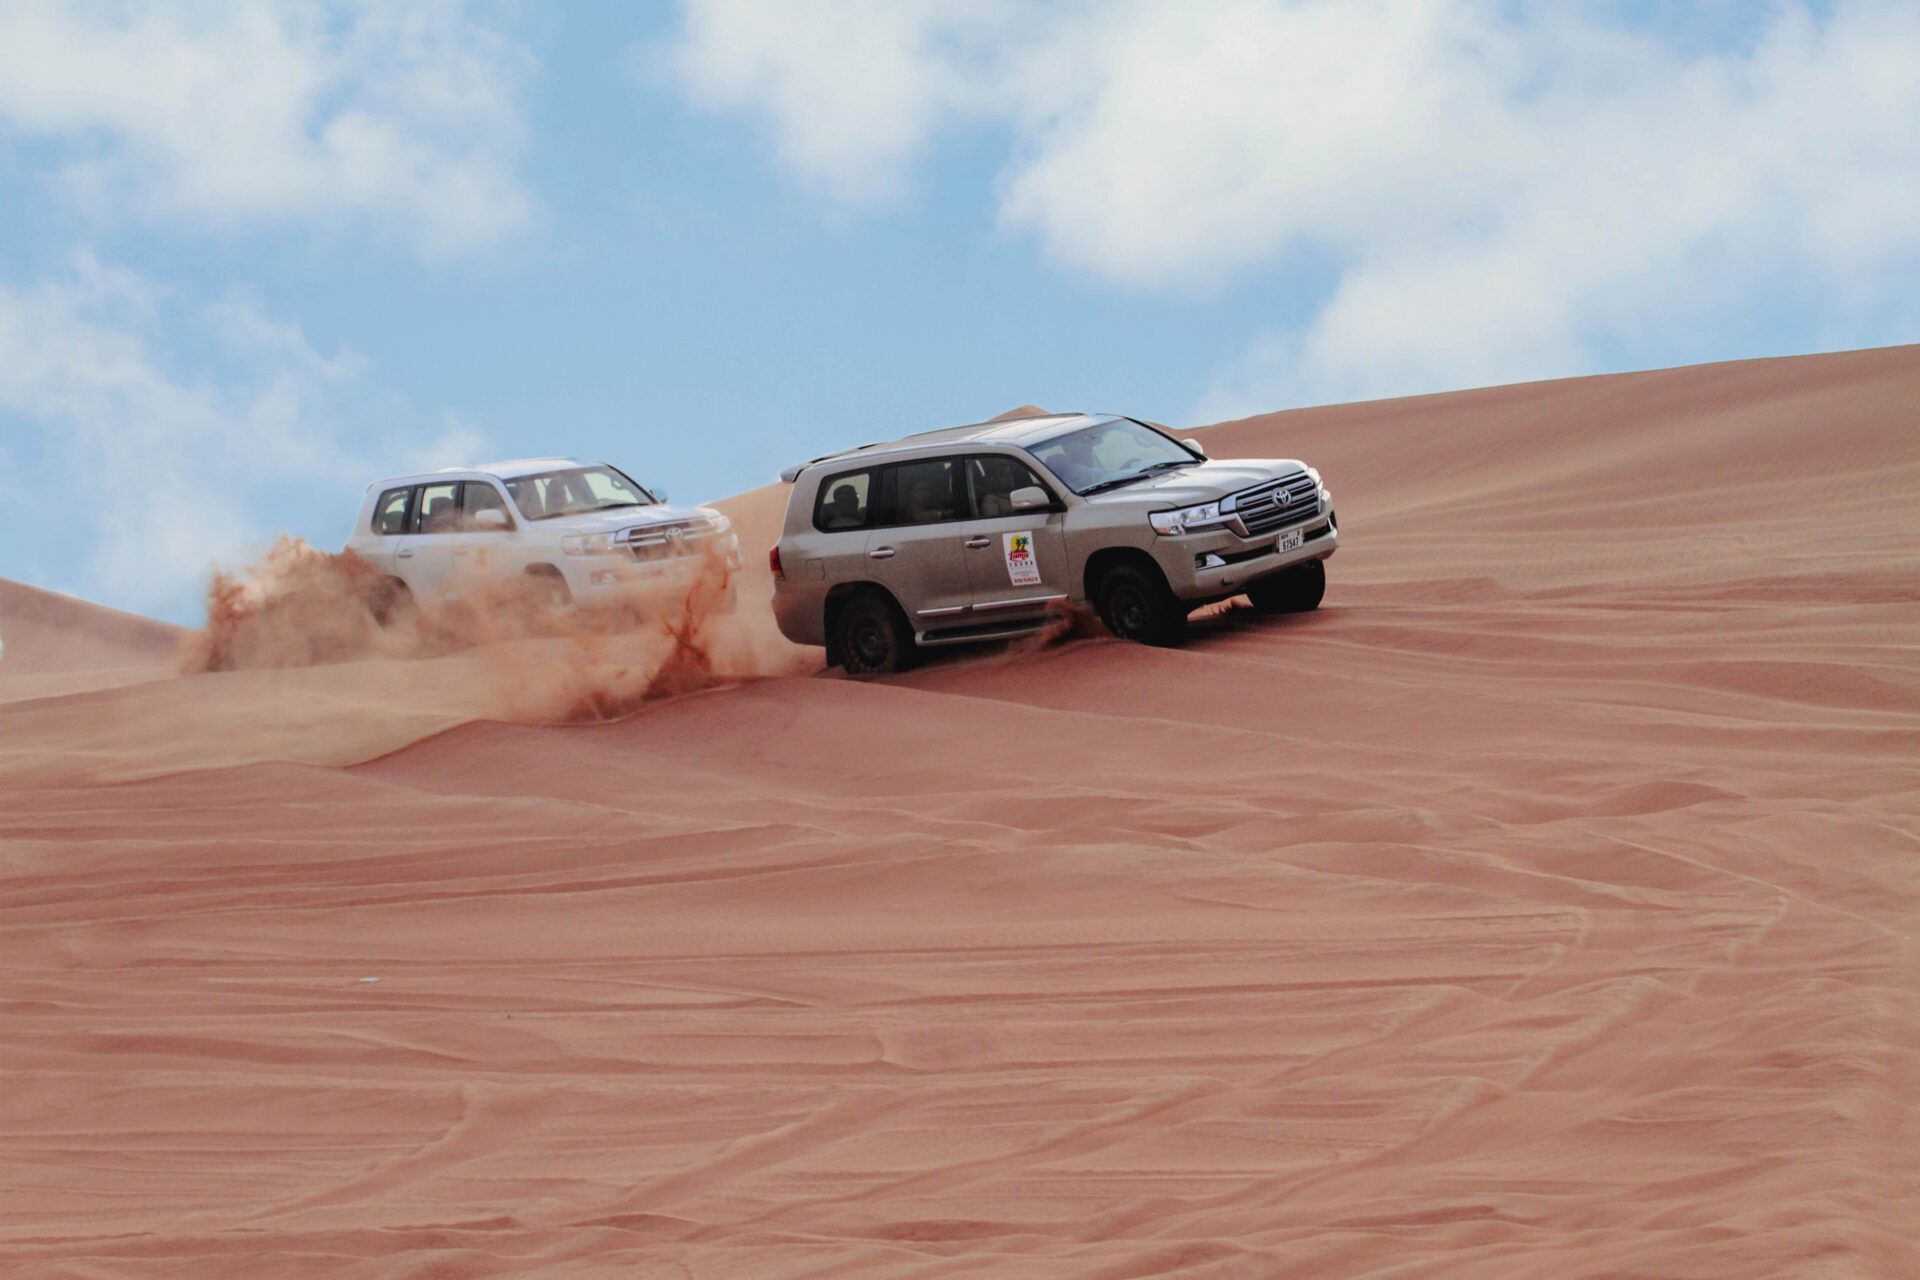 Dune bashing in a 4×4 vehicle